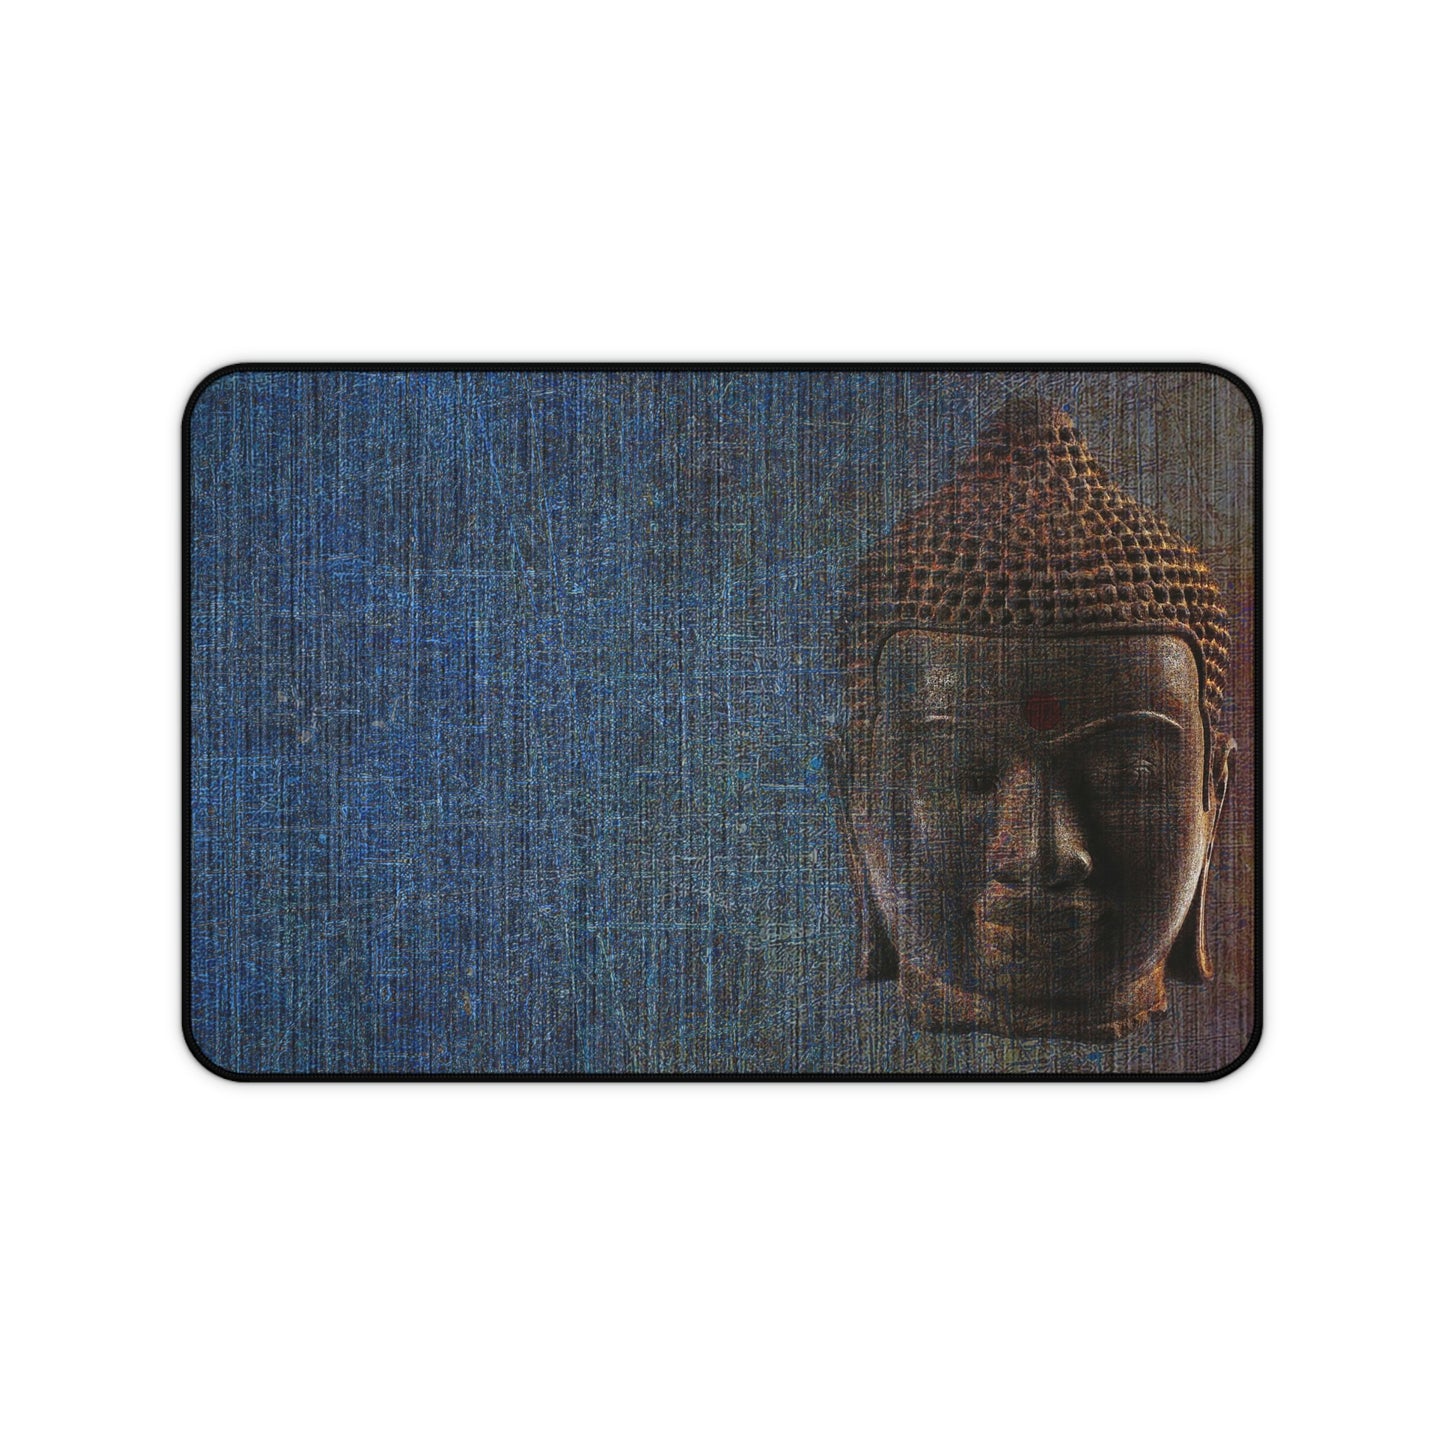 Buddha Themed Desk Accessories - Blue Buddha Head Neoprene Desk mat 12 by 18